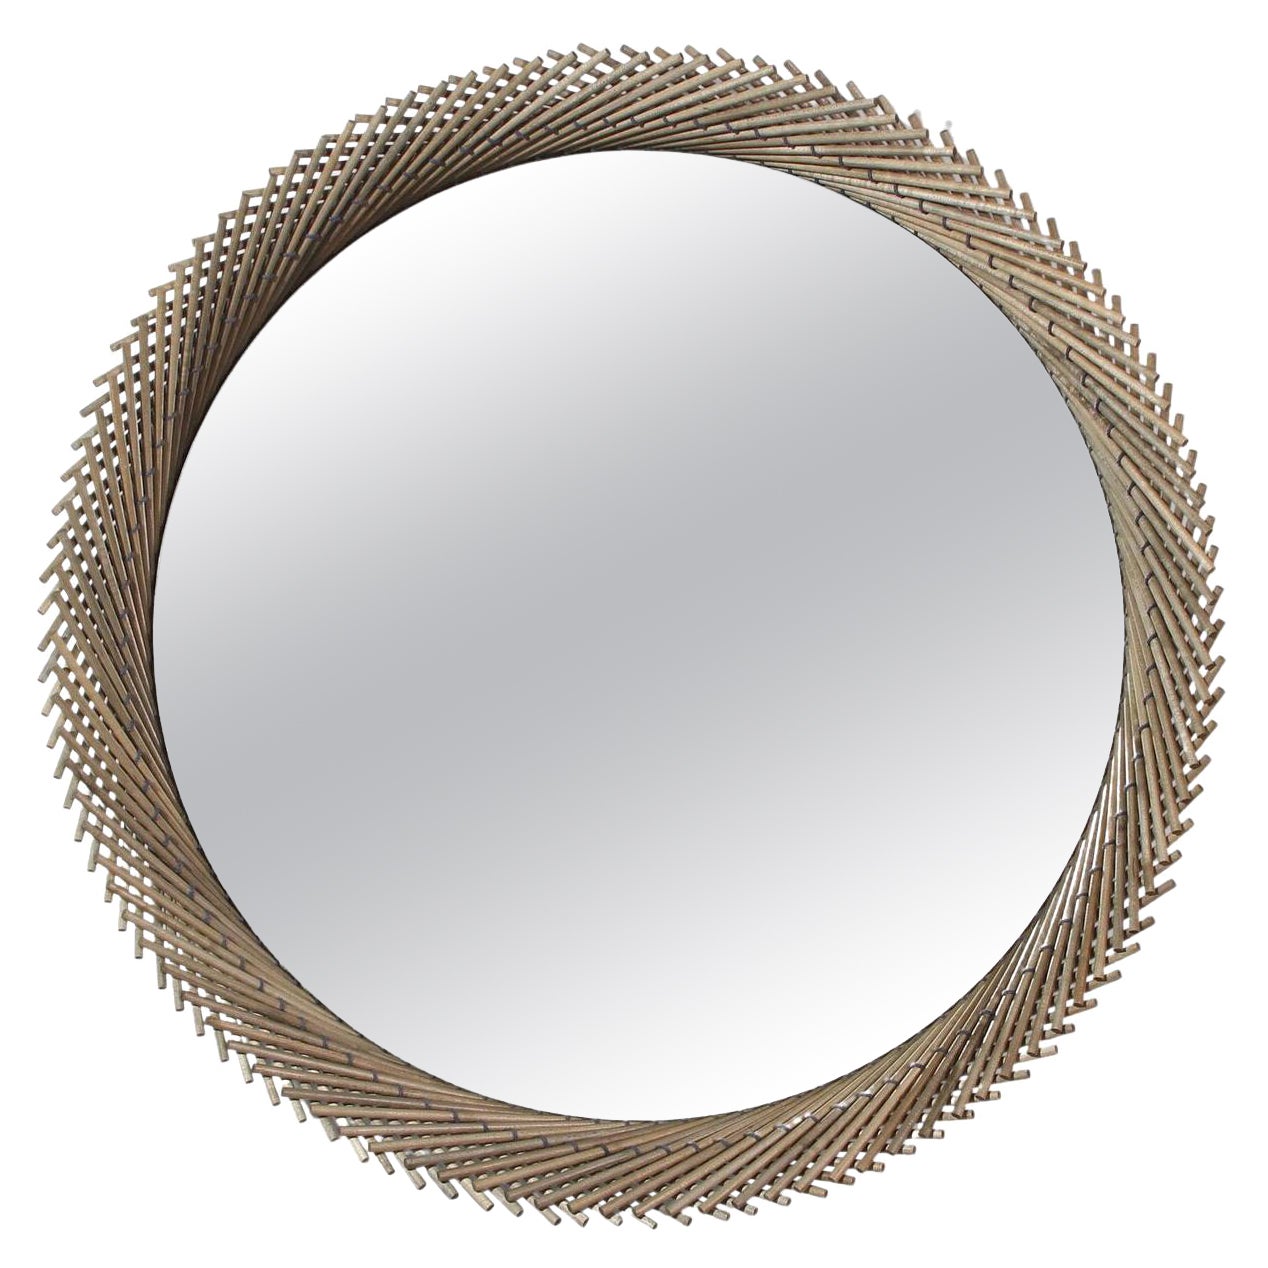 Mooda Round Mirror 30 / Oxidized Maple Wood, Clear Mirror by INDO-